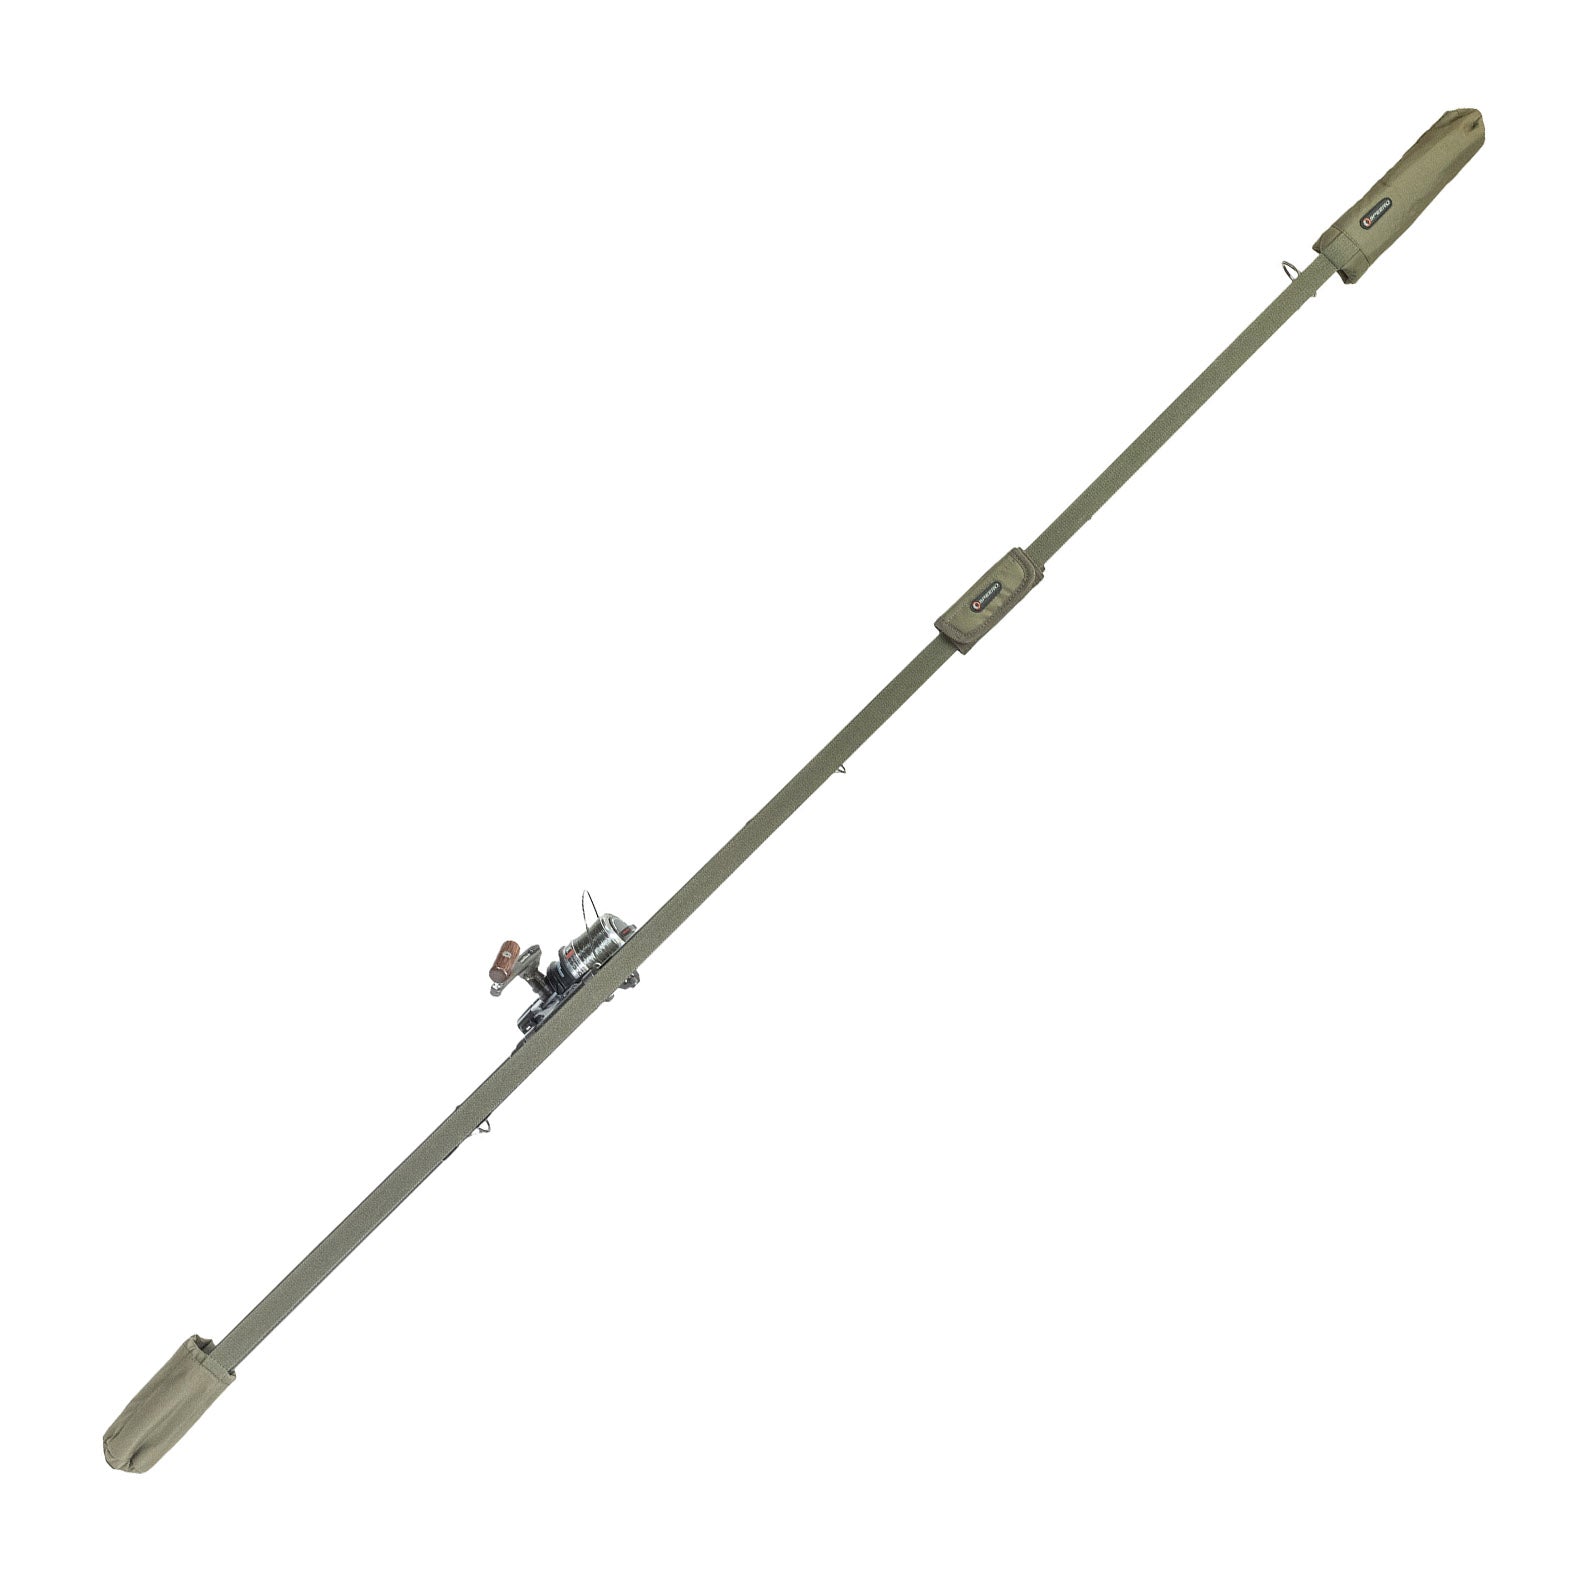 Speero Adjustable Tiptops Rod Lead Bands